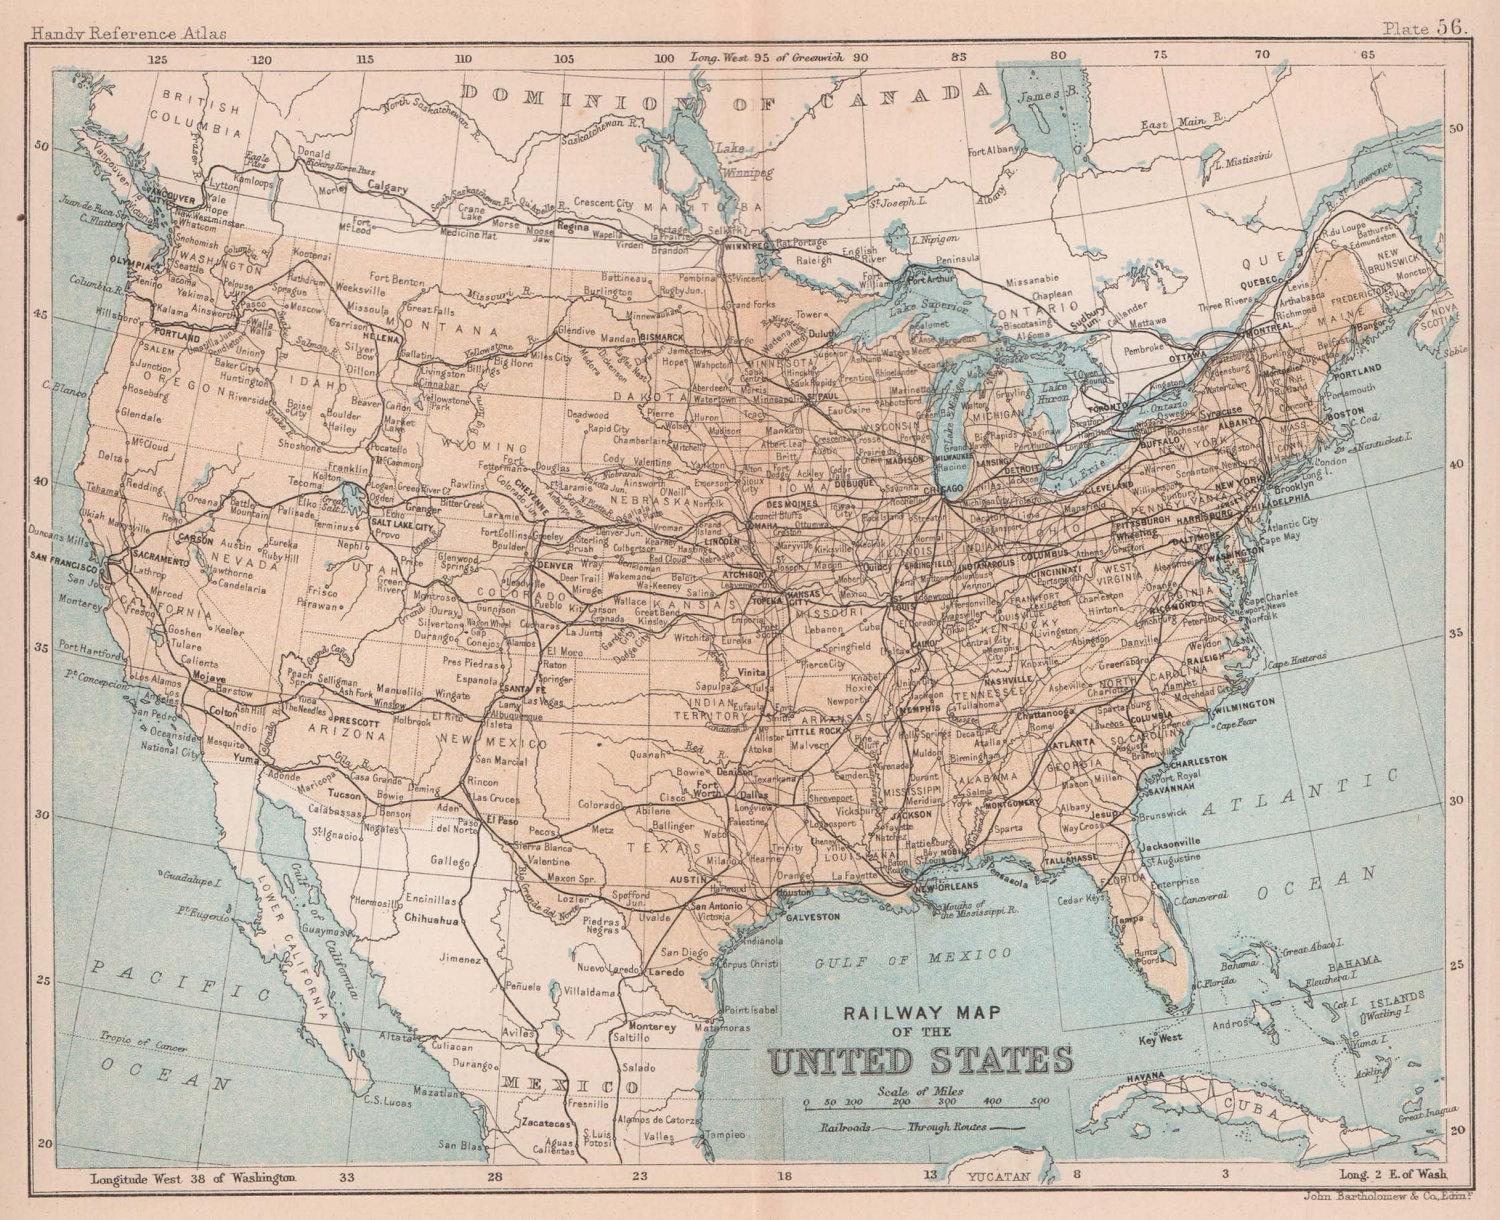 Associate Product Railway Map of the United States. USA. BARTHOLOMEW 1893 old antique chart